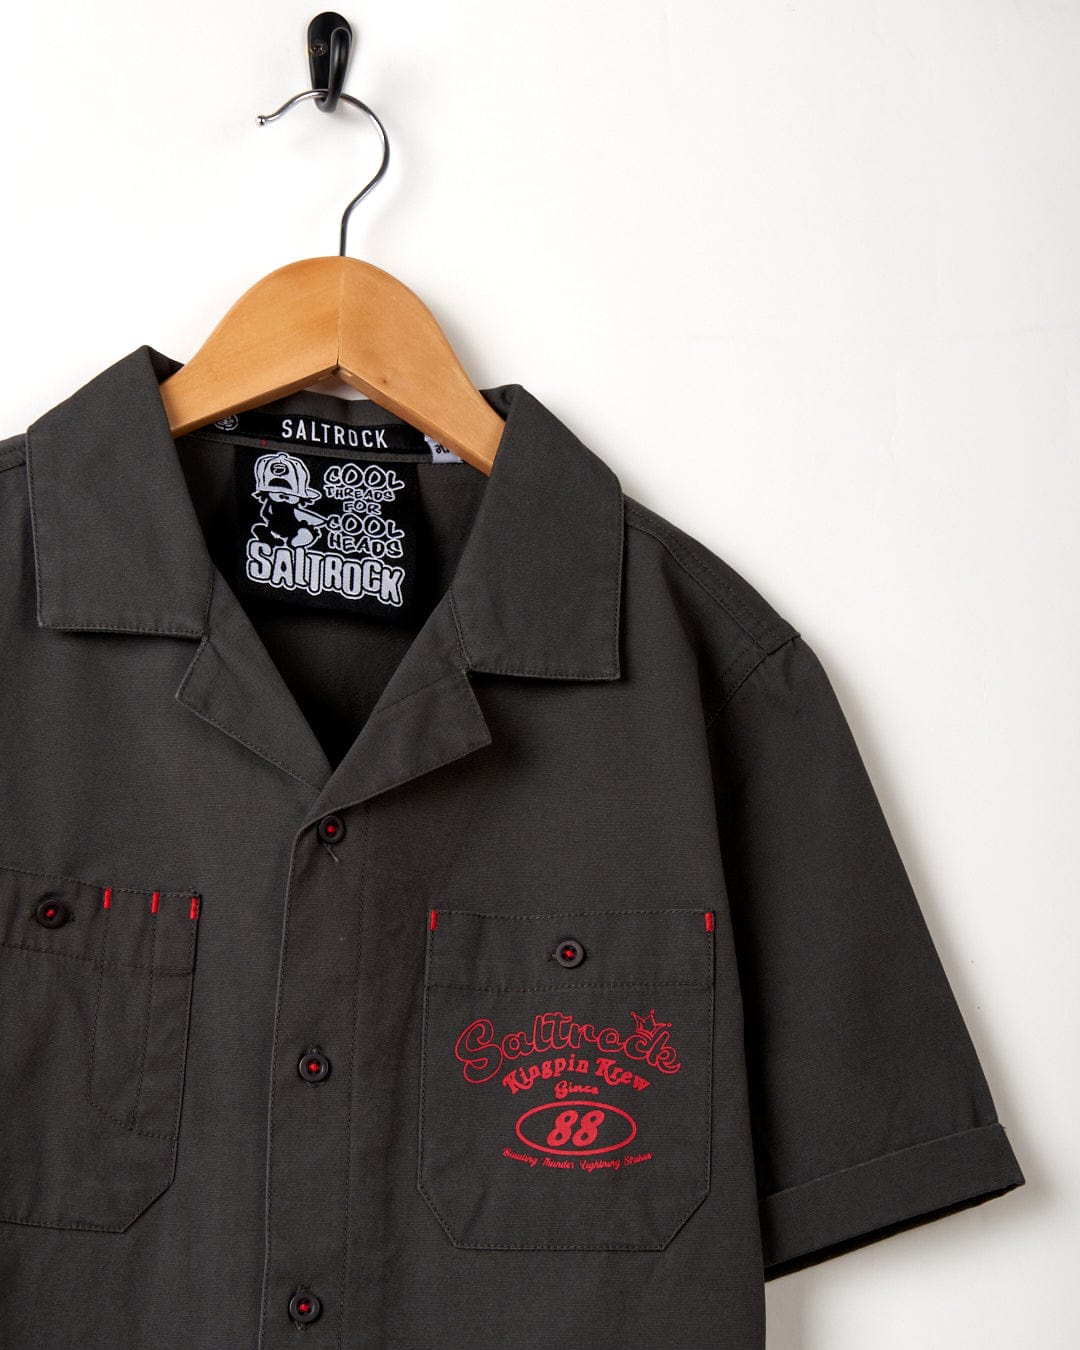 A dark grey Saltrock Kingpin Krew - Kids Short Sleeve Shirt with a red logo hanging on a hanger.